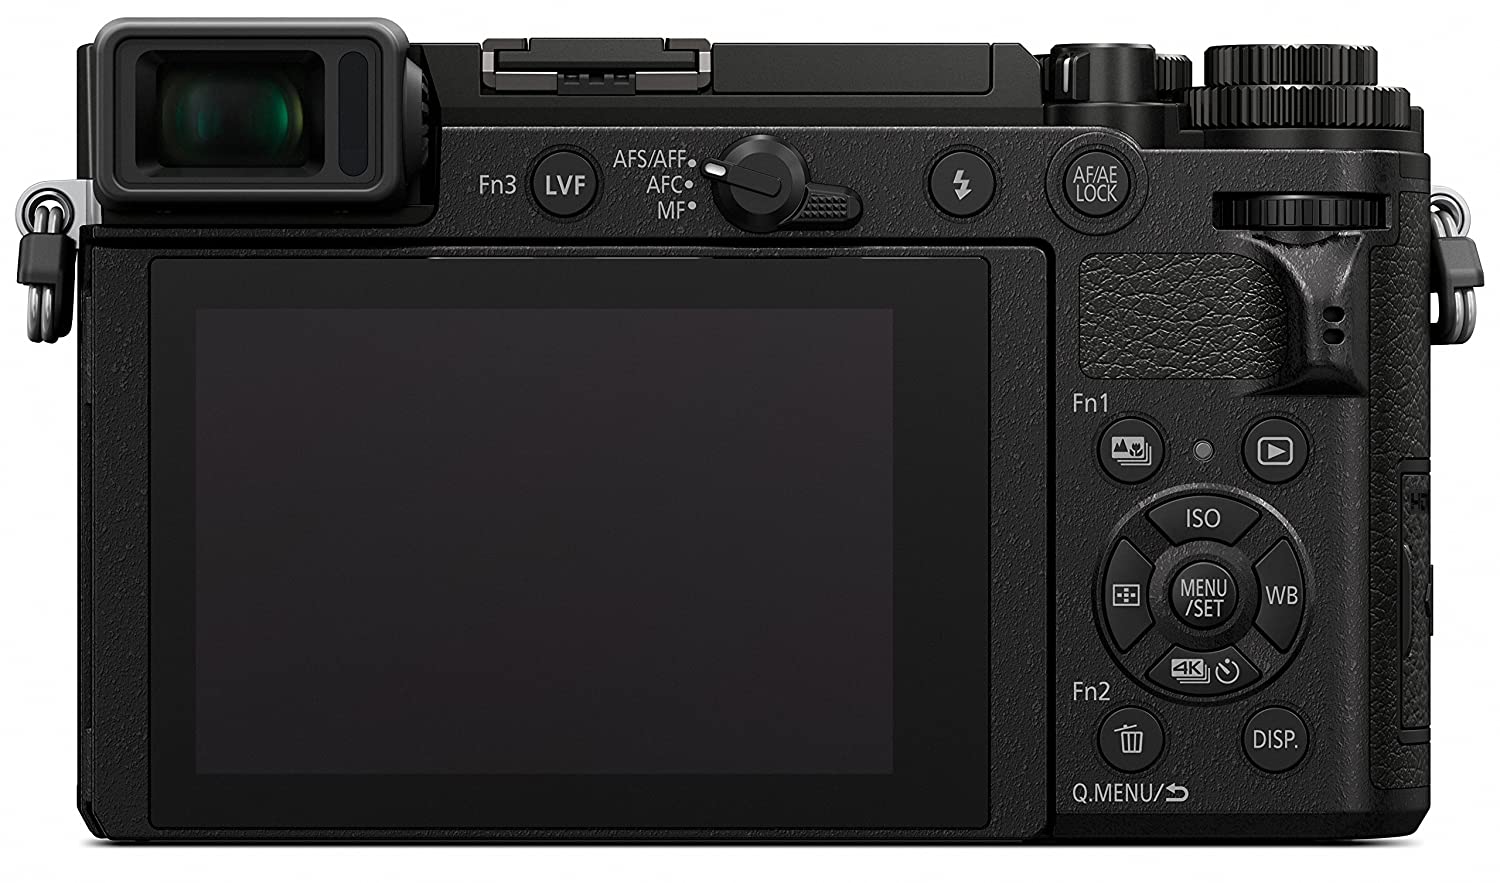 Panasonic Lumix DC-GX9MK Mirrorless Camera Body with 12-60mm F3.5-5.6 Lens